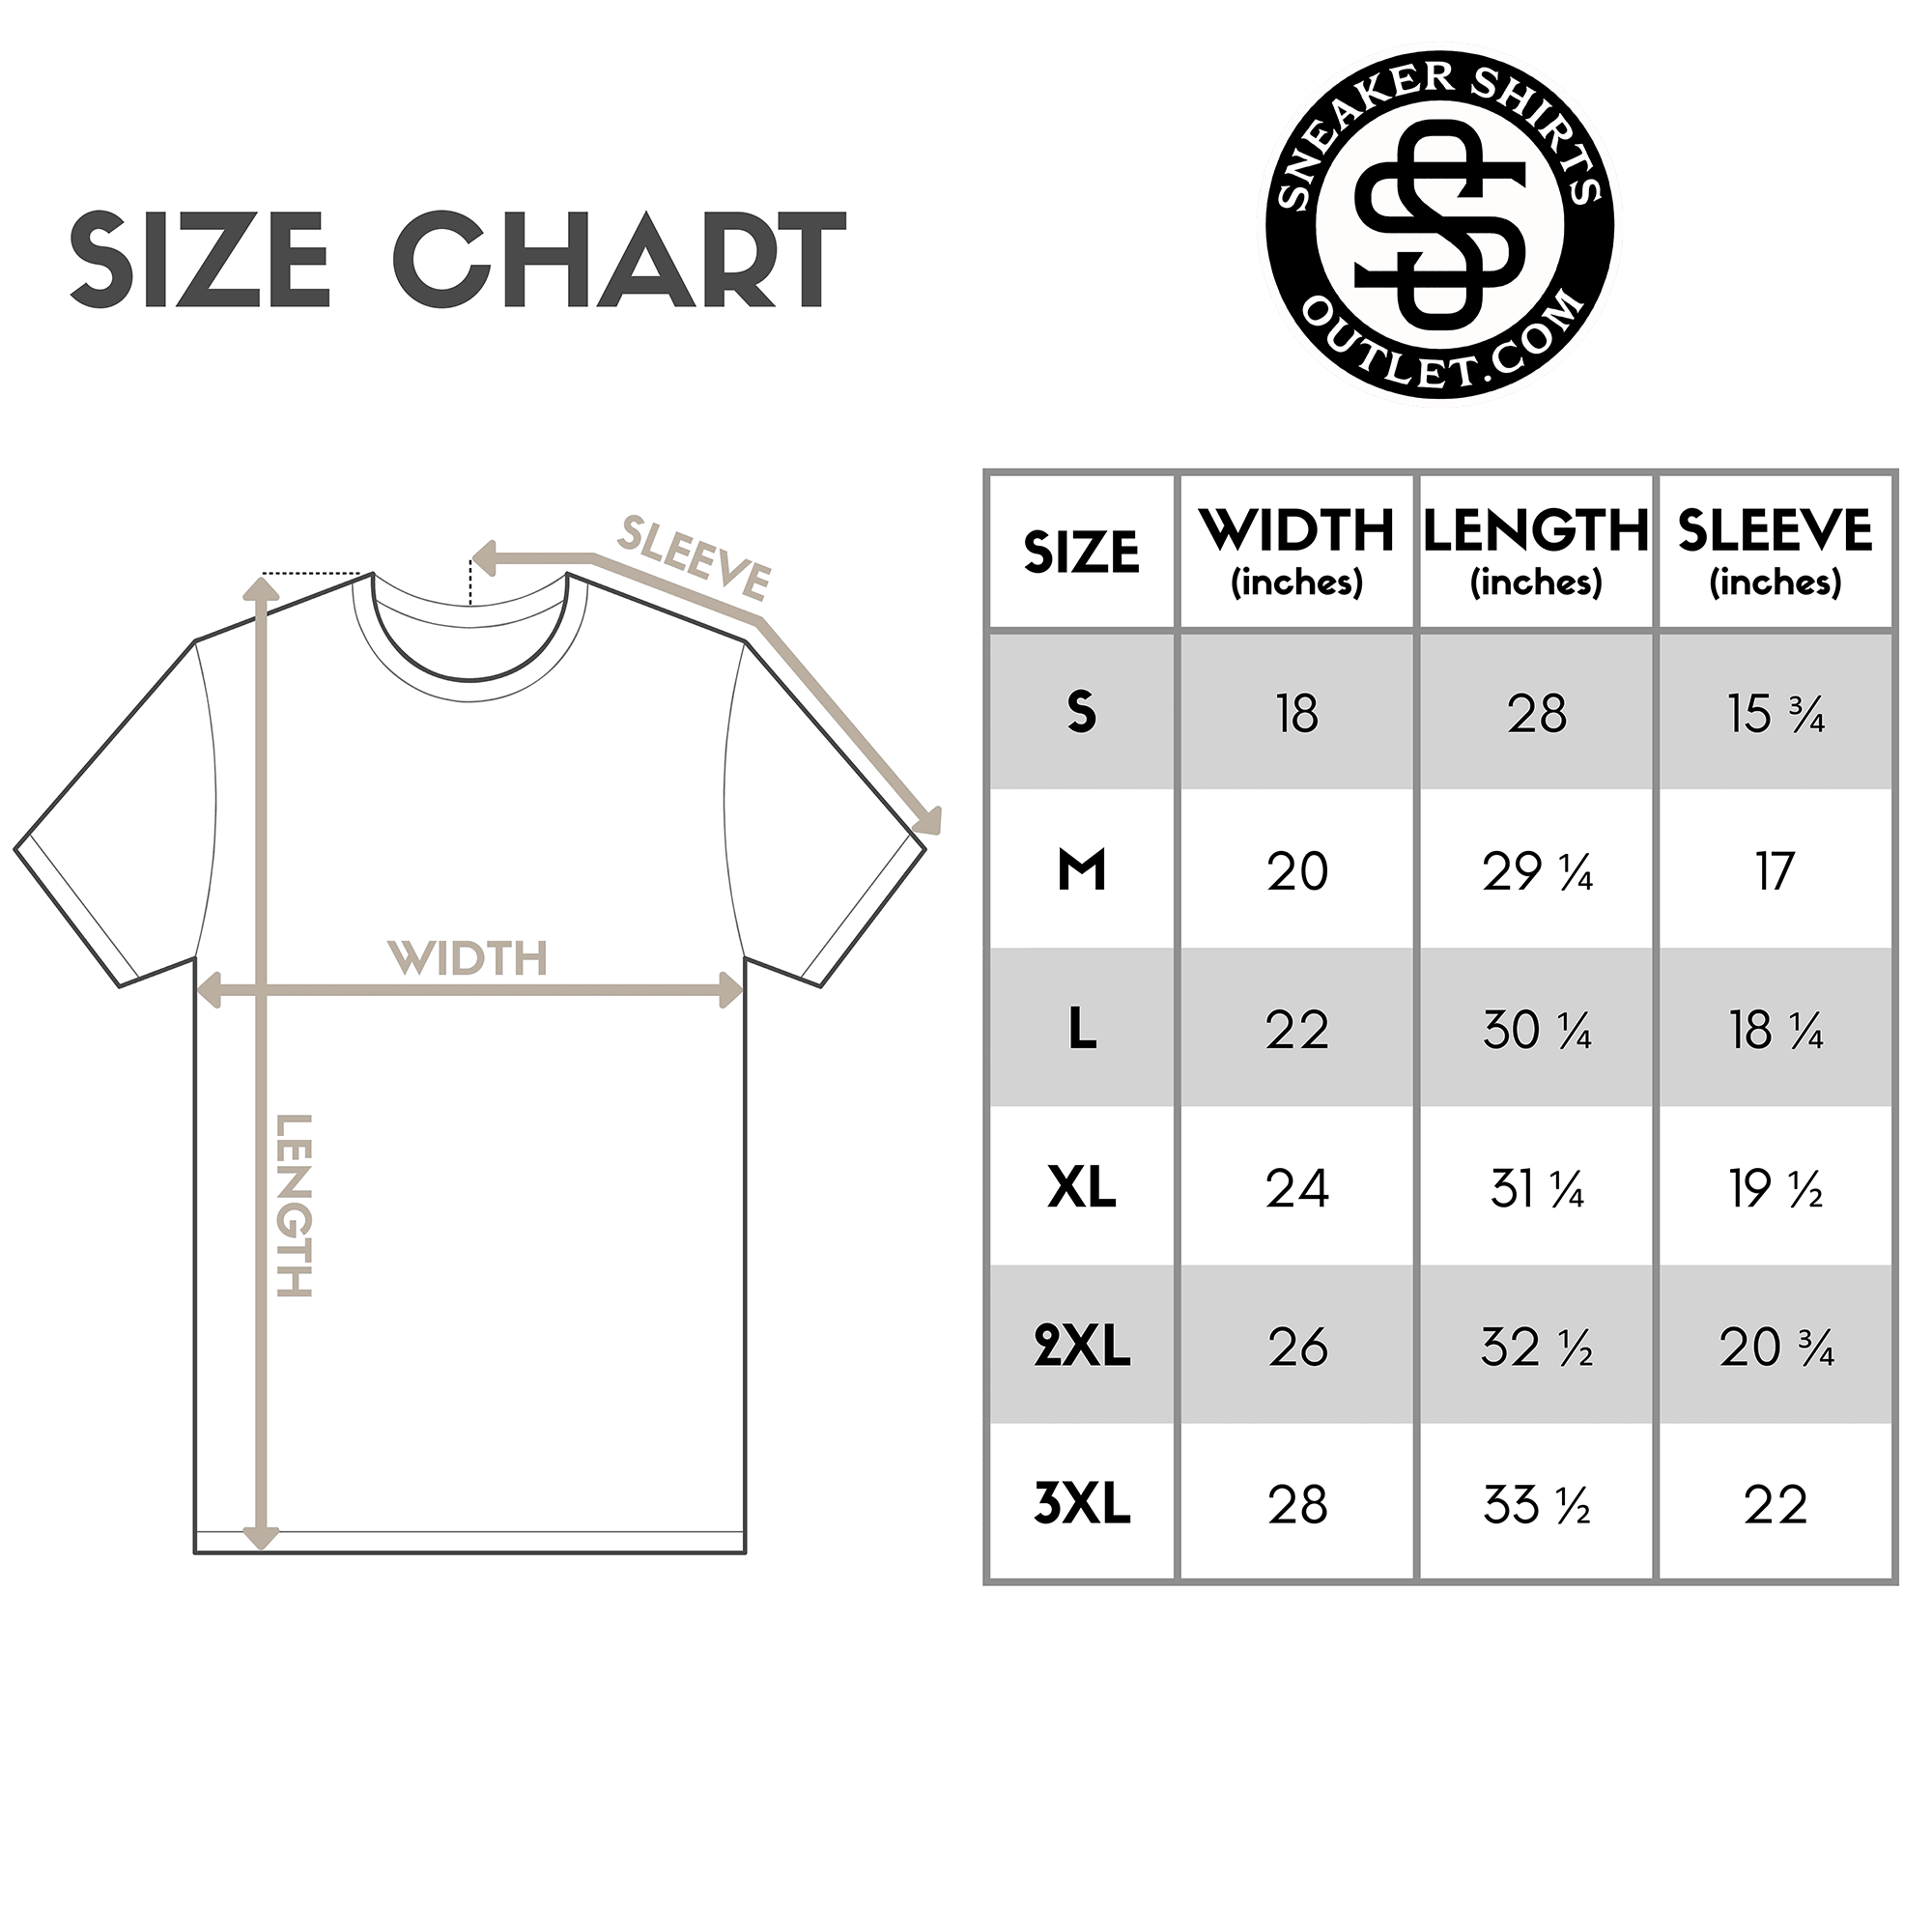 size chart for Sassy Classy Shirt Jordan 14s Low Shocking Pink photo